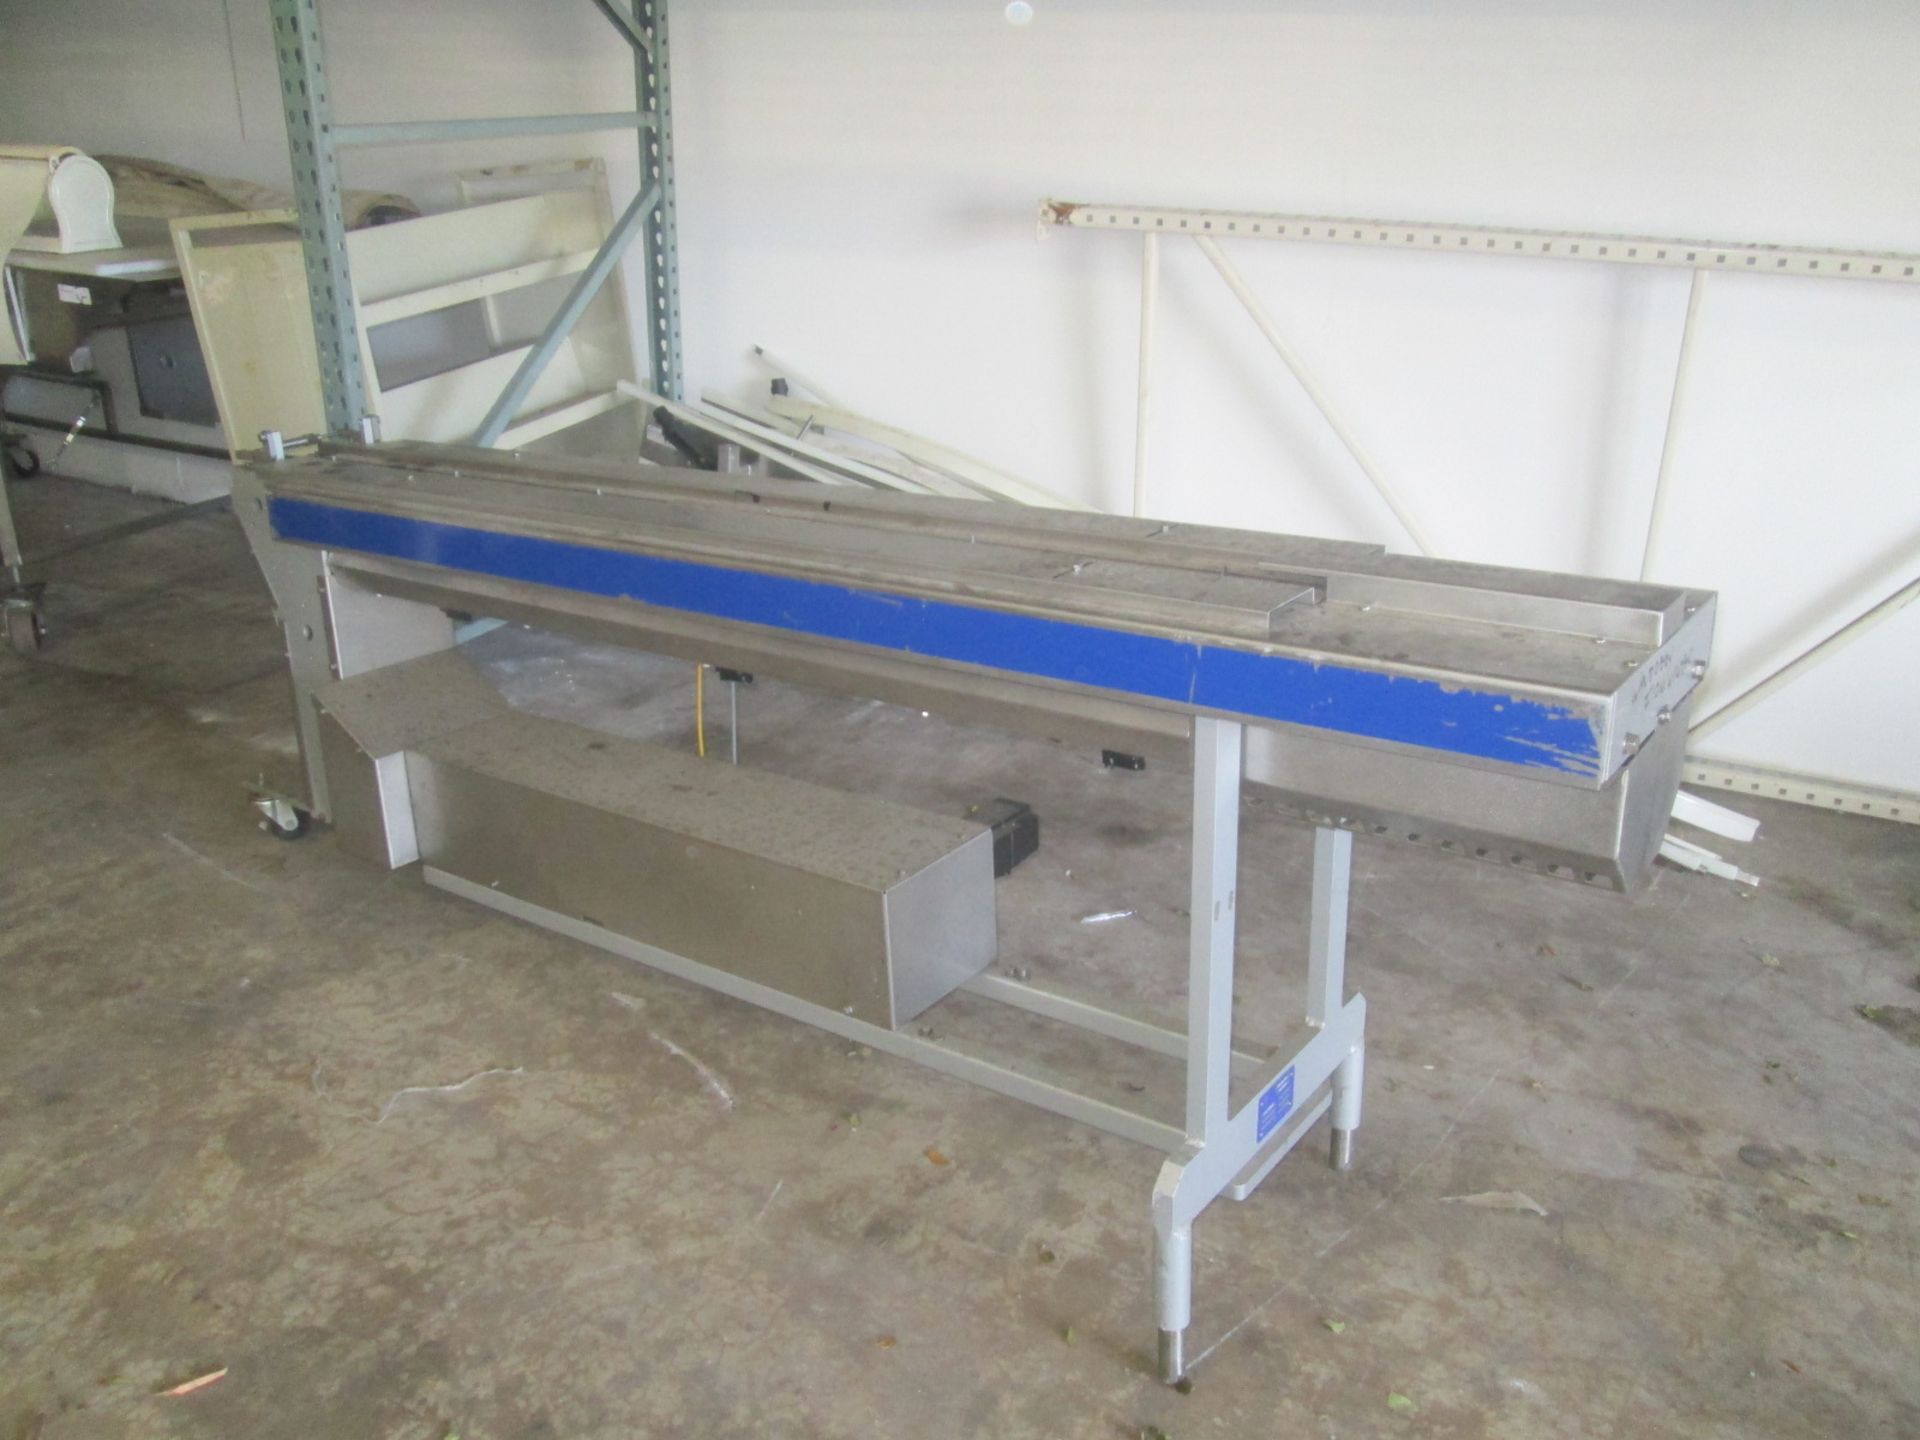 Sig Doboy CrossFeede Serial number 03-24859, Inclined Cleated Rollaway Stainless Steel Conveyor